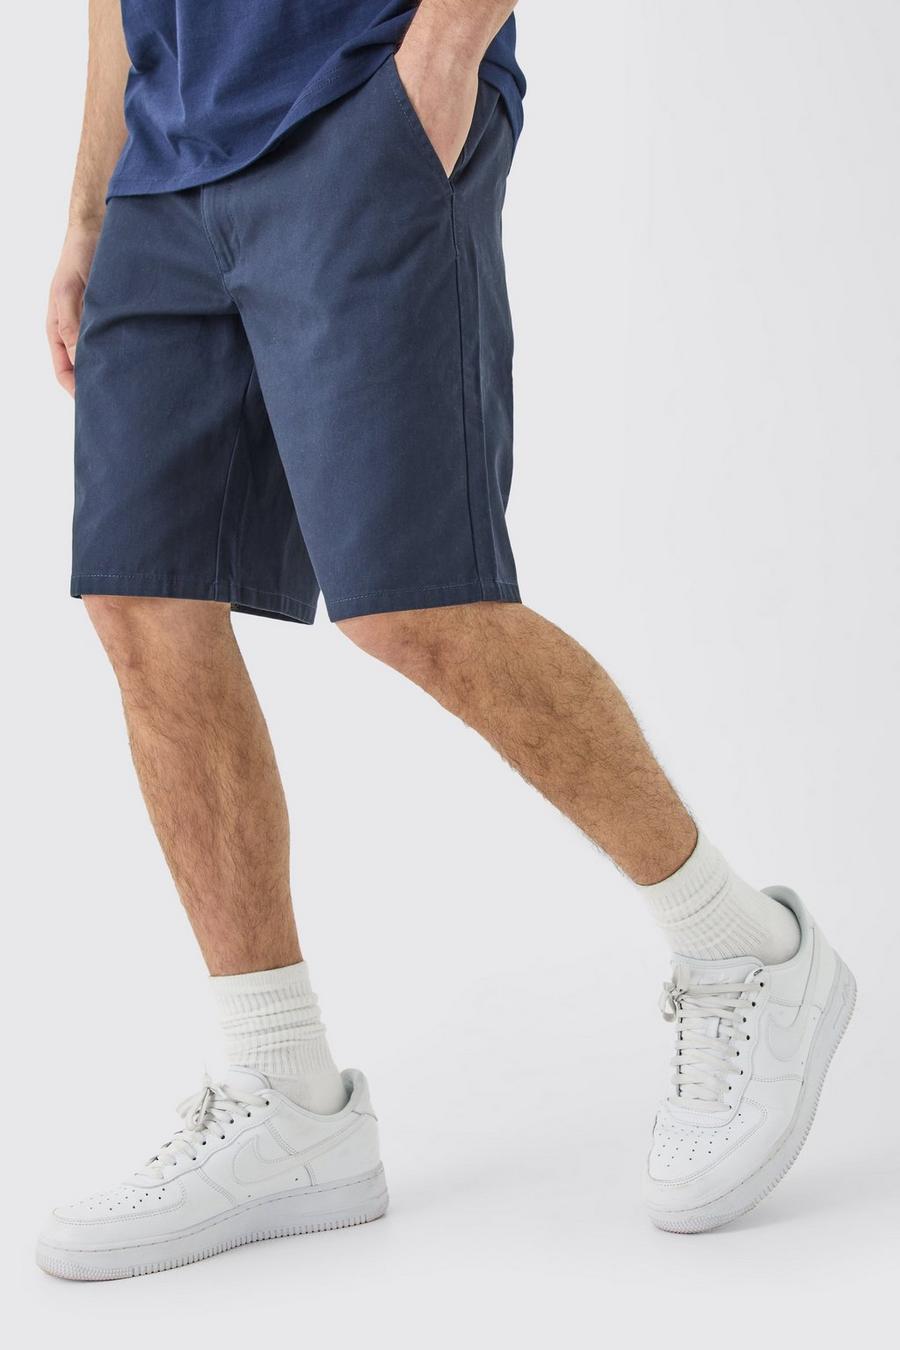 Pantalón corto holgado azul marino con cintura fija, Navy